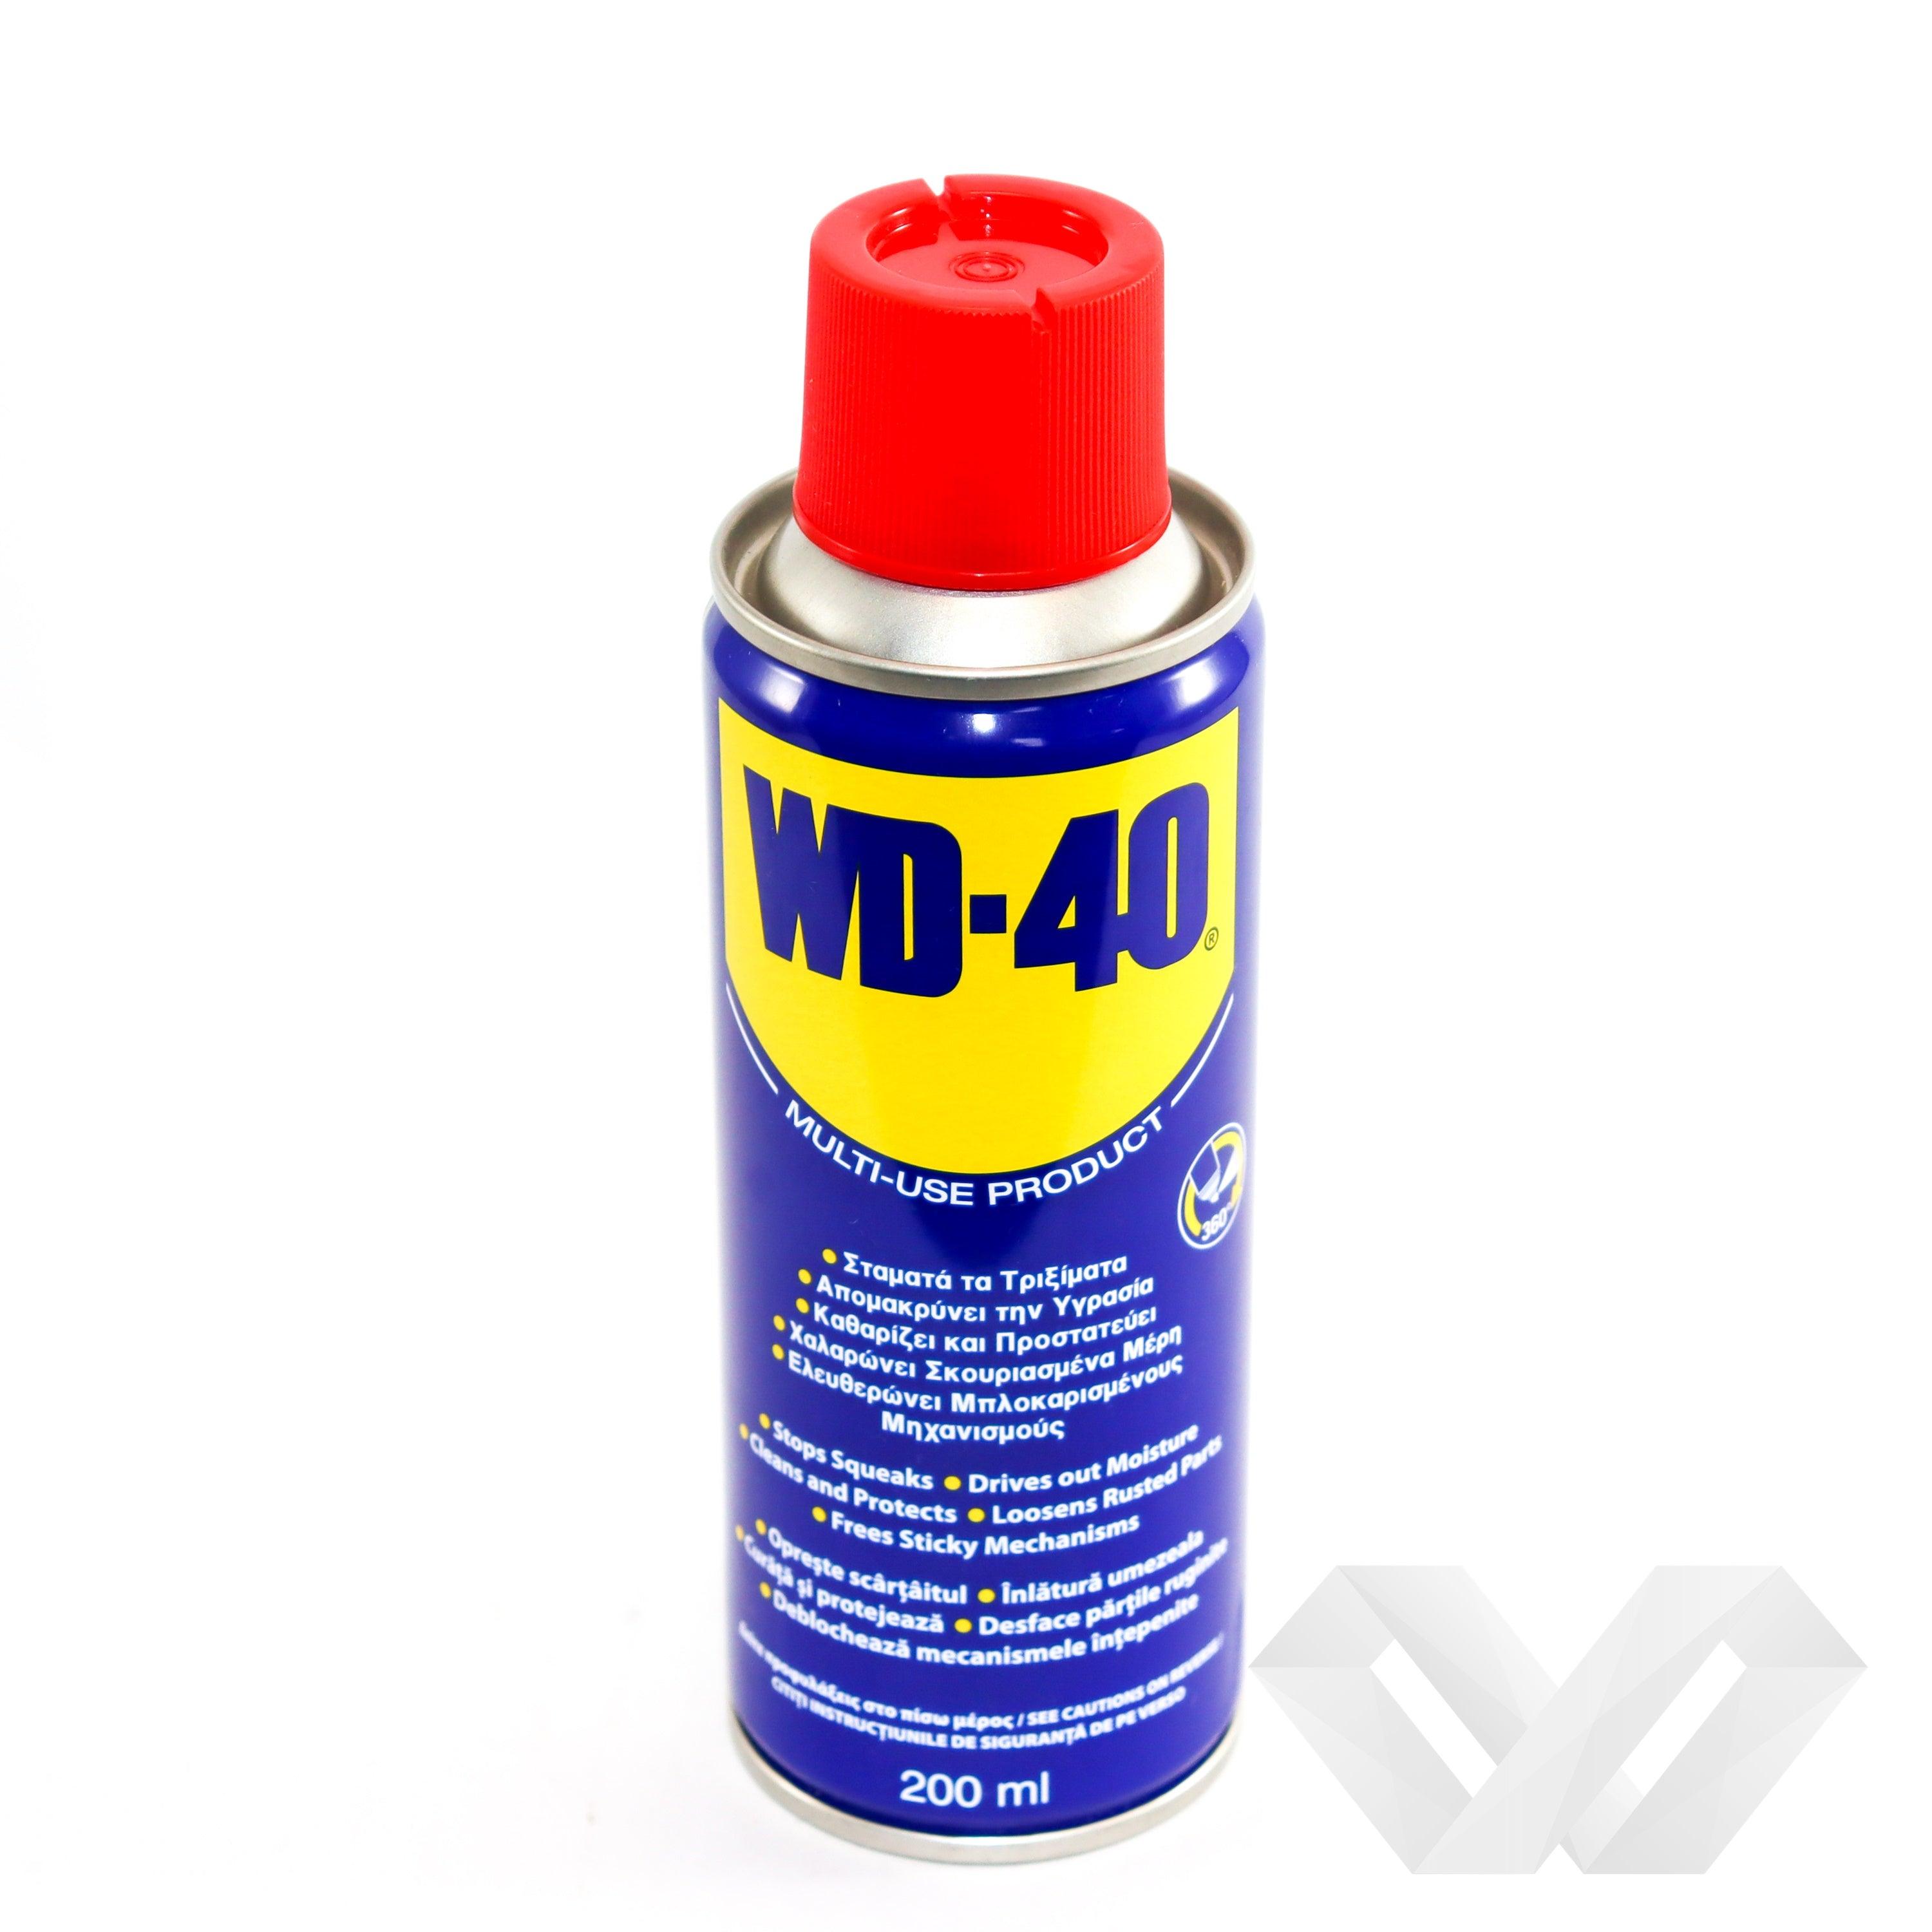 Spray lubrifiant multifunctional WD-40, 200ml